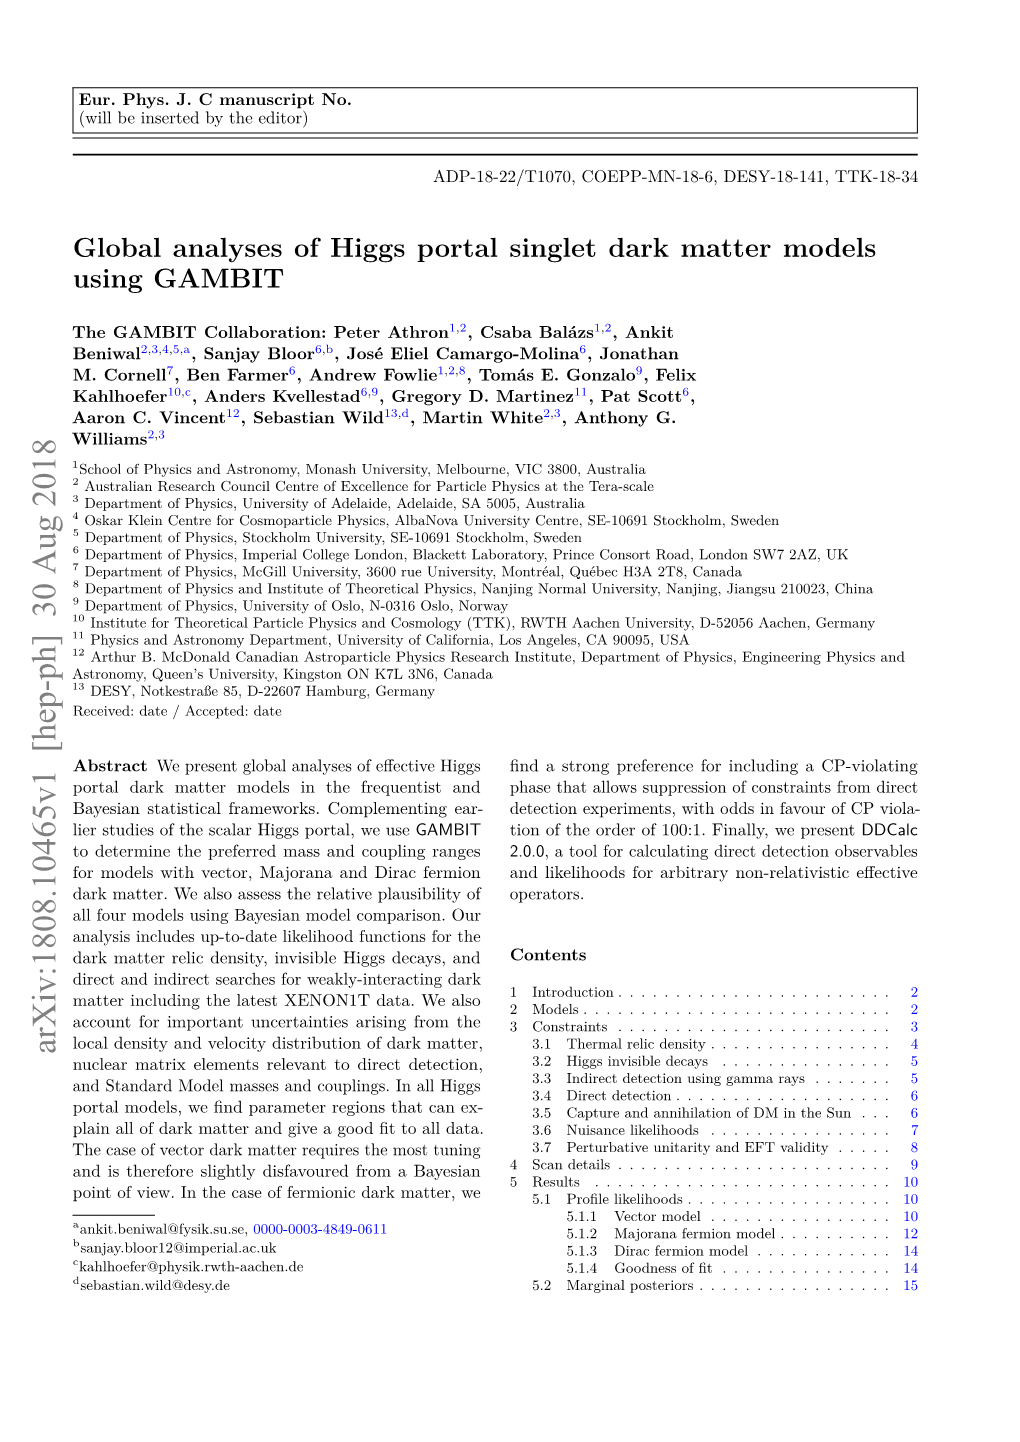 Global Analyses of Higgs Portal Singlet Dark Matter Models Using GAMBIT